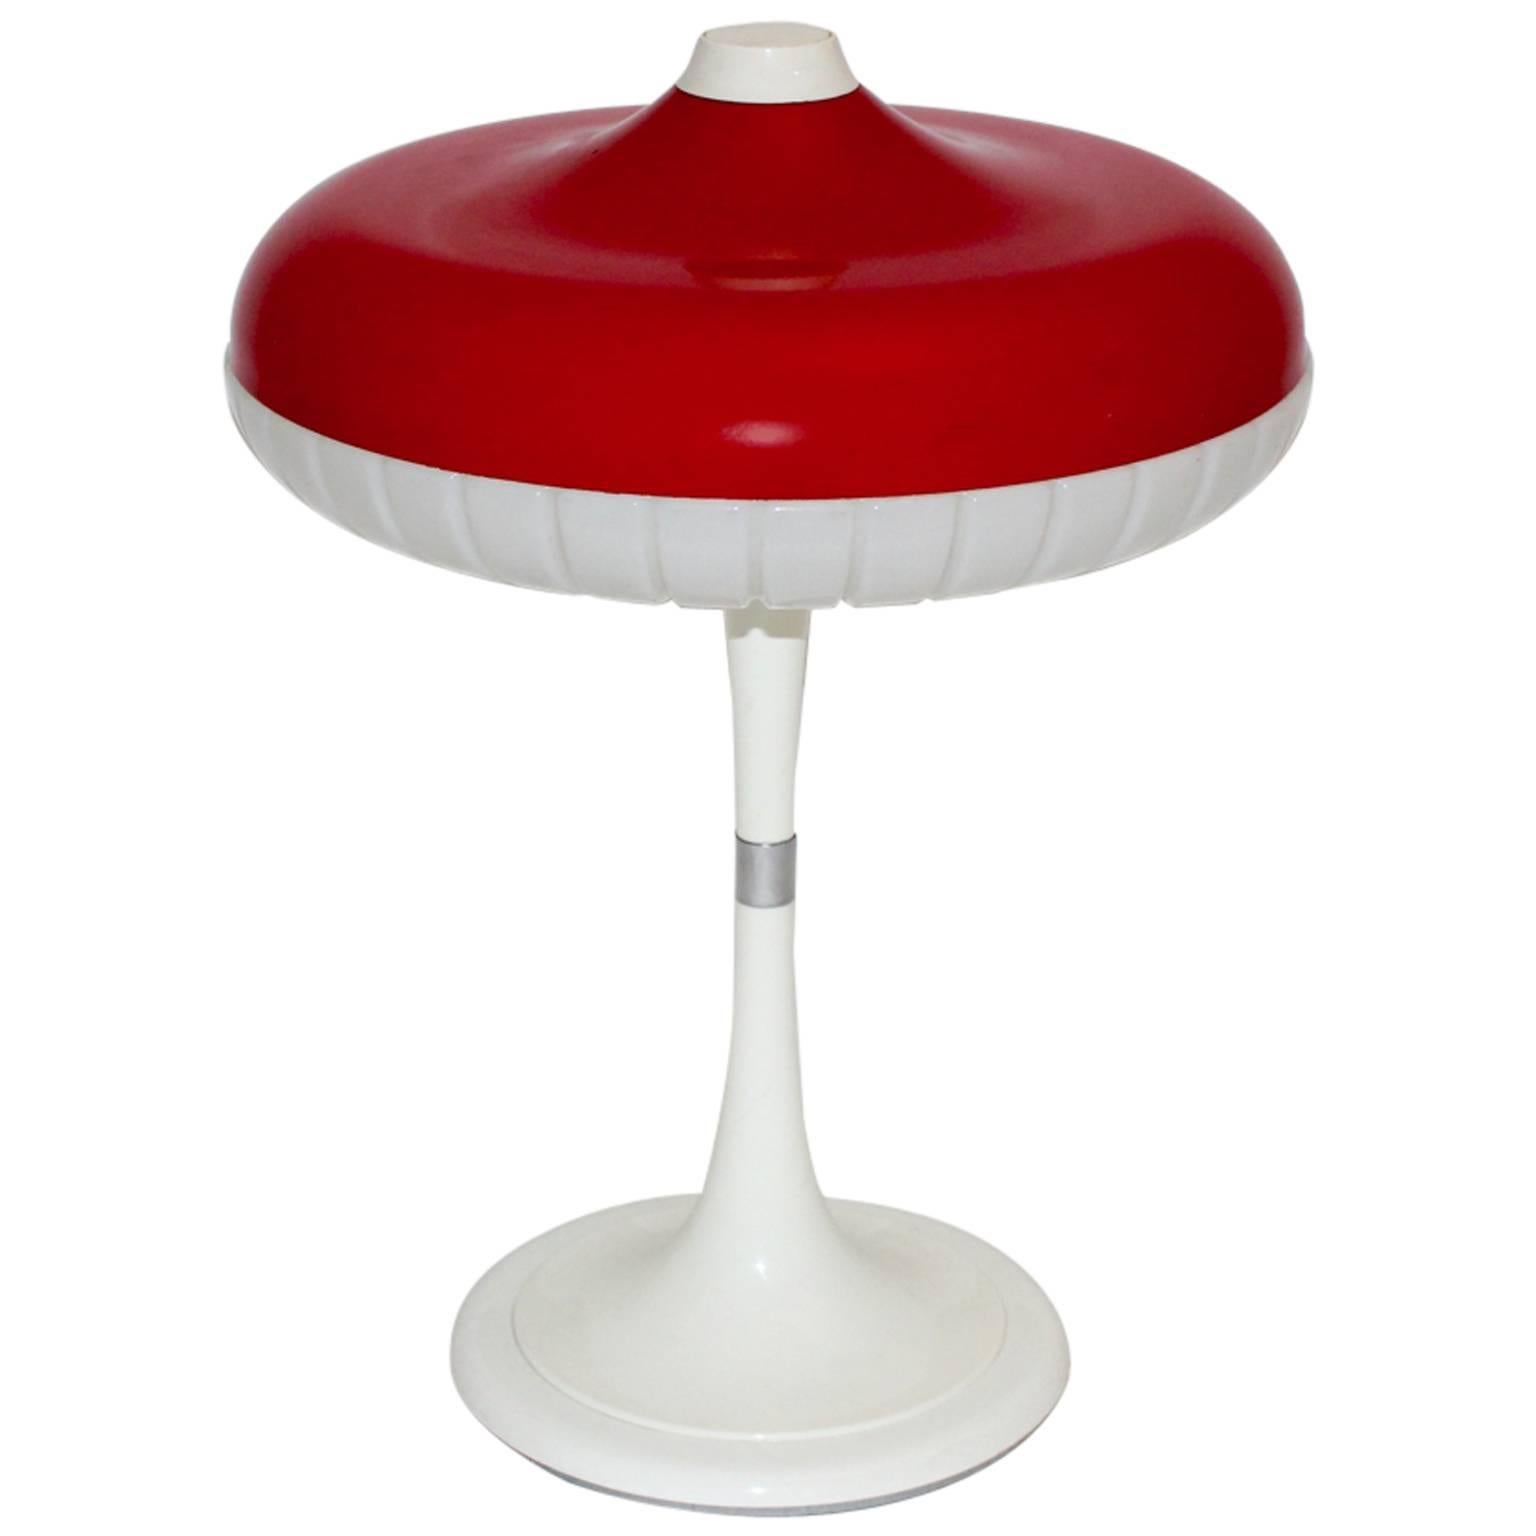 Space Age Red Vintage Mushroom Table Lamp Siform by Siemens Germany, 1960s